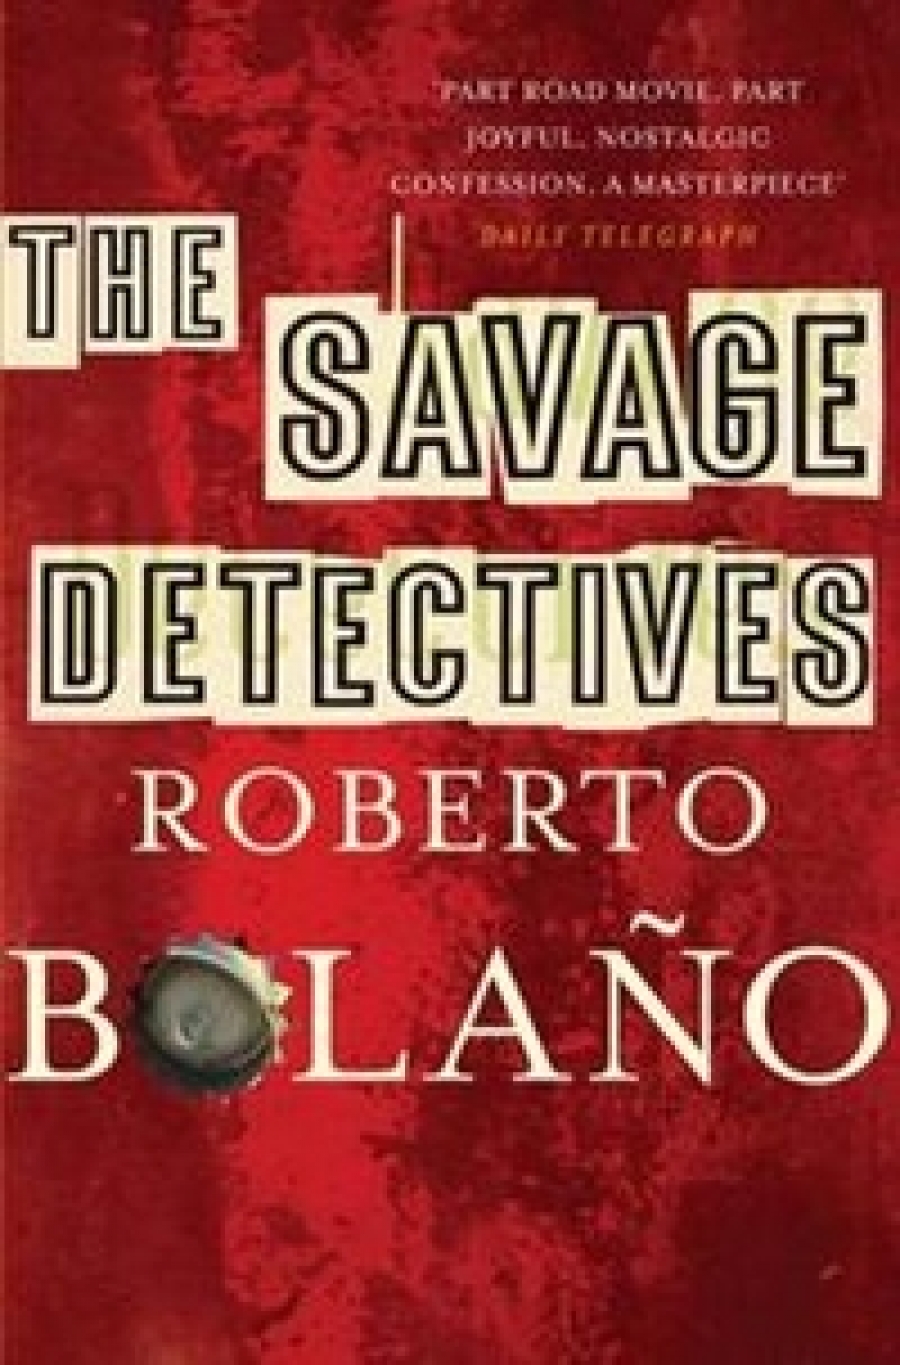 Roberto B. Savage Detectives (NY Times Book of the Year) 